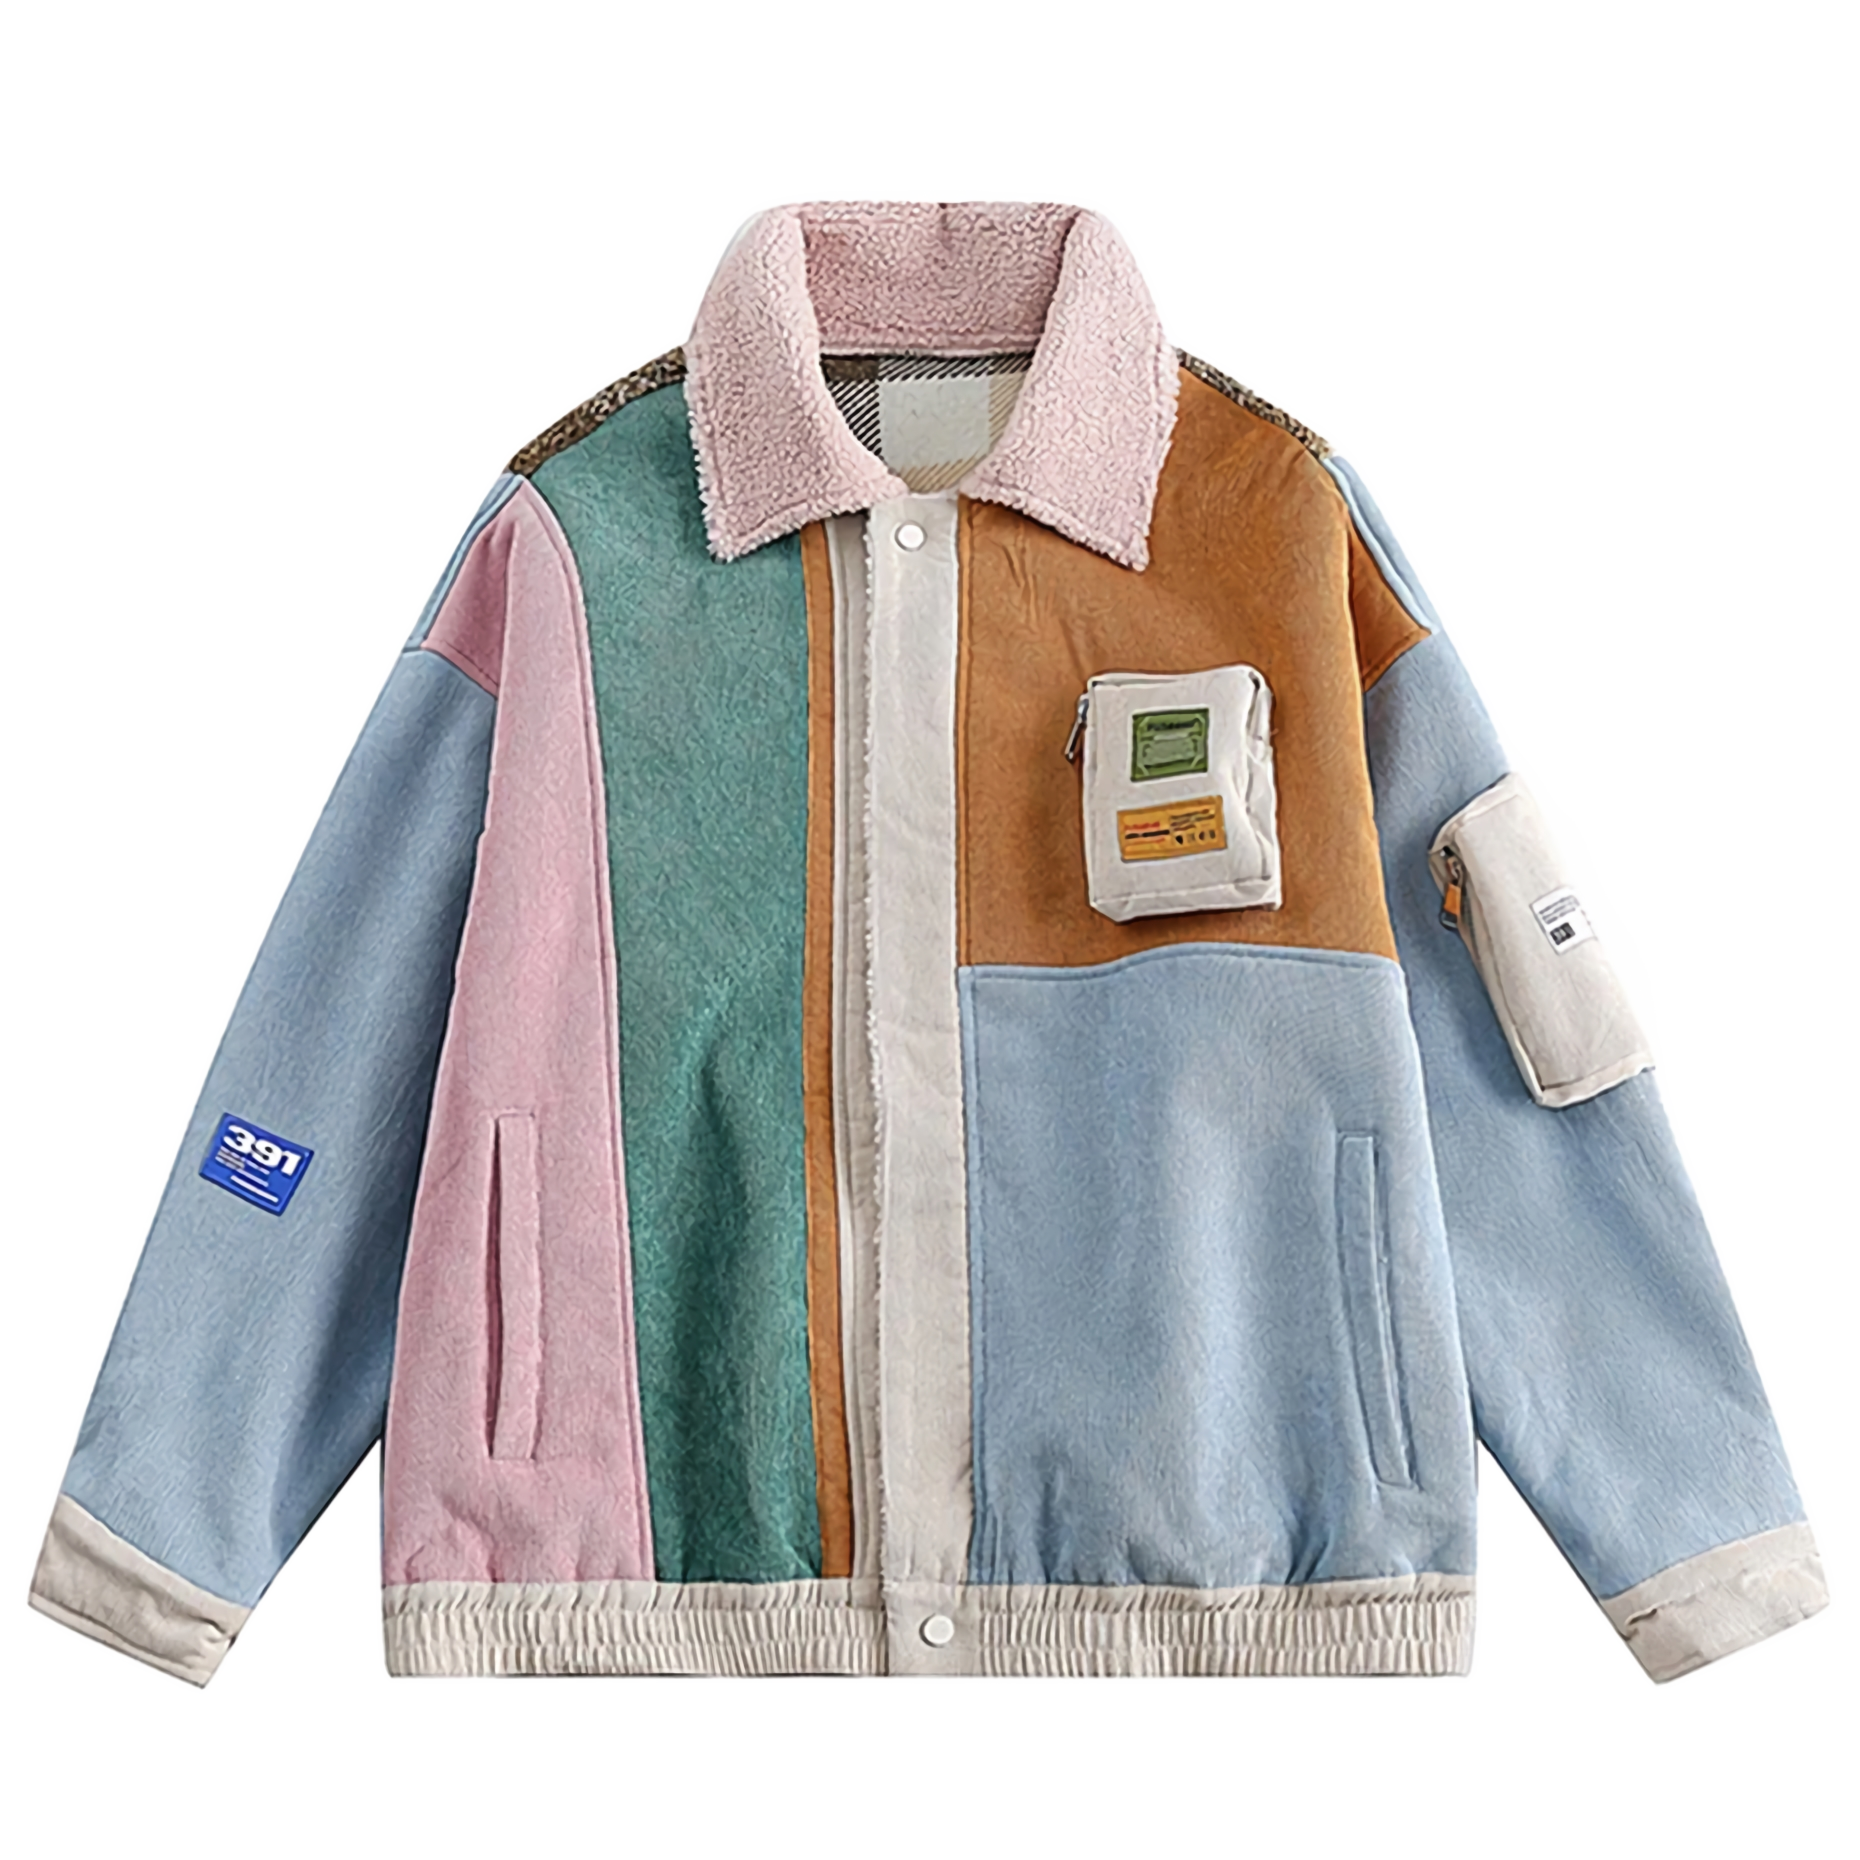 Retro Pastel Abstract Fleece Jacket